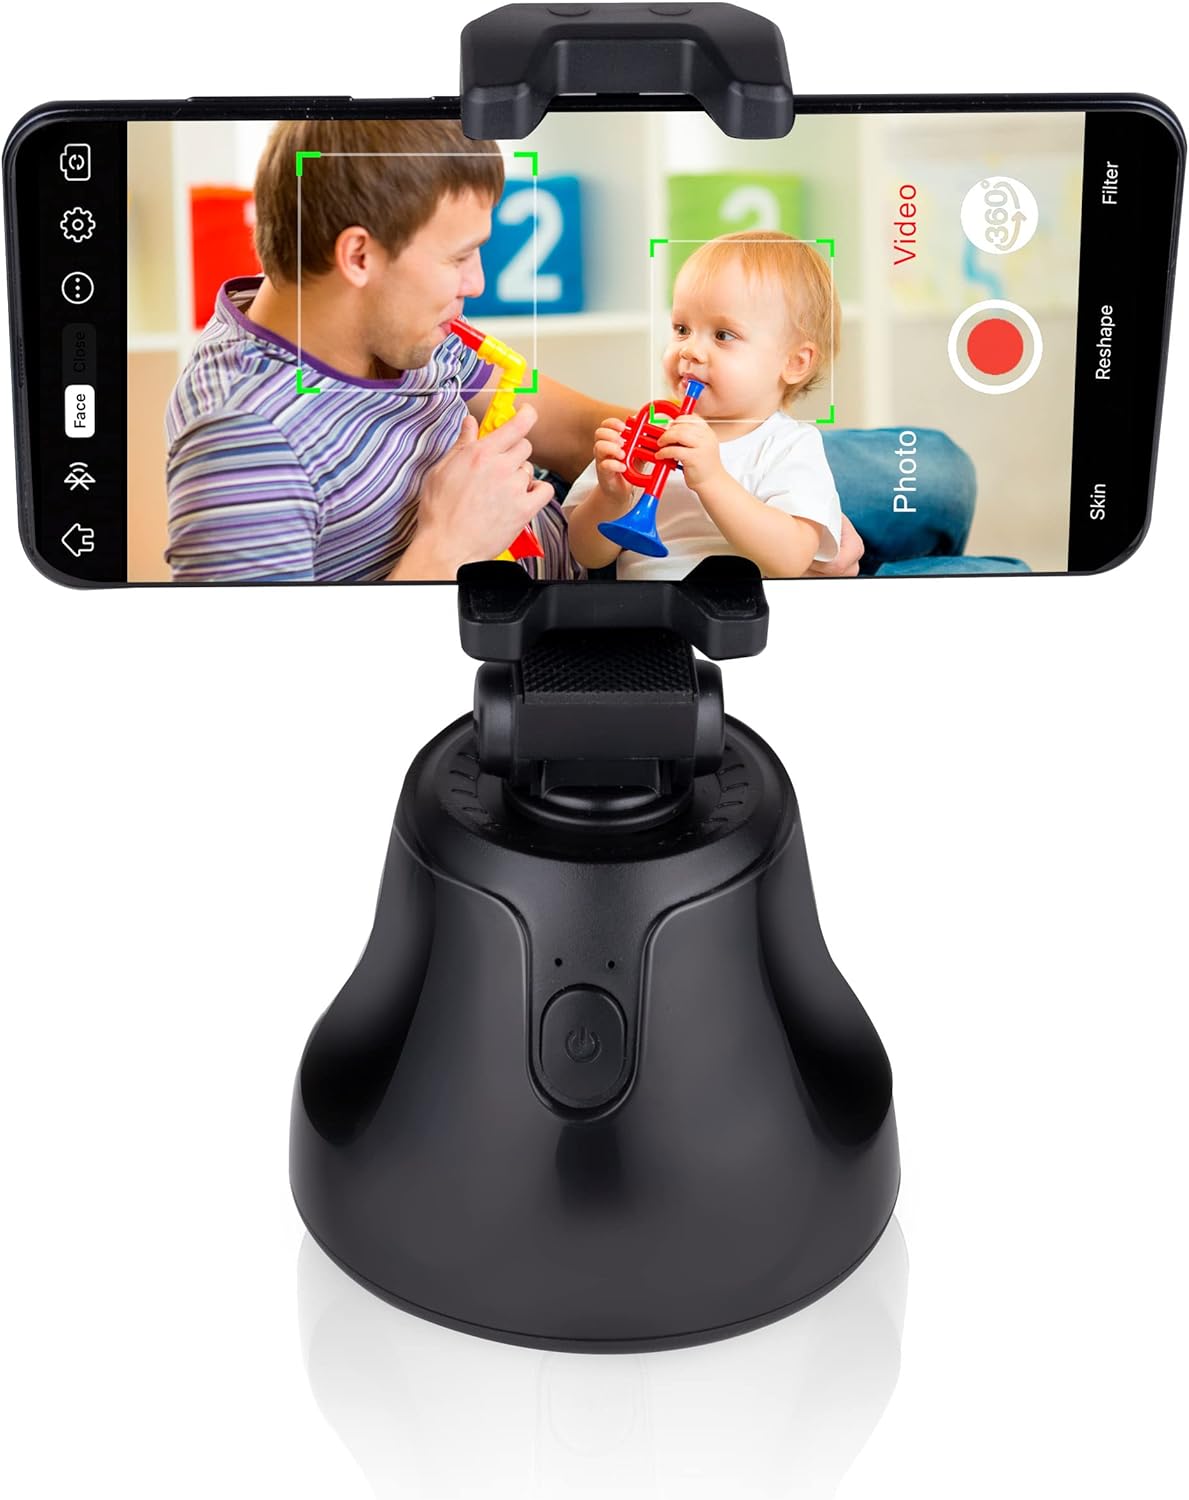 Grundig ED-49803: 360° Rotating, Face/ Object Tracking Phone Holder for Vlogger